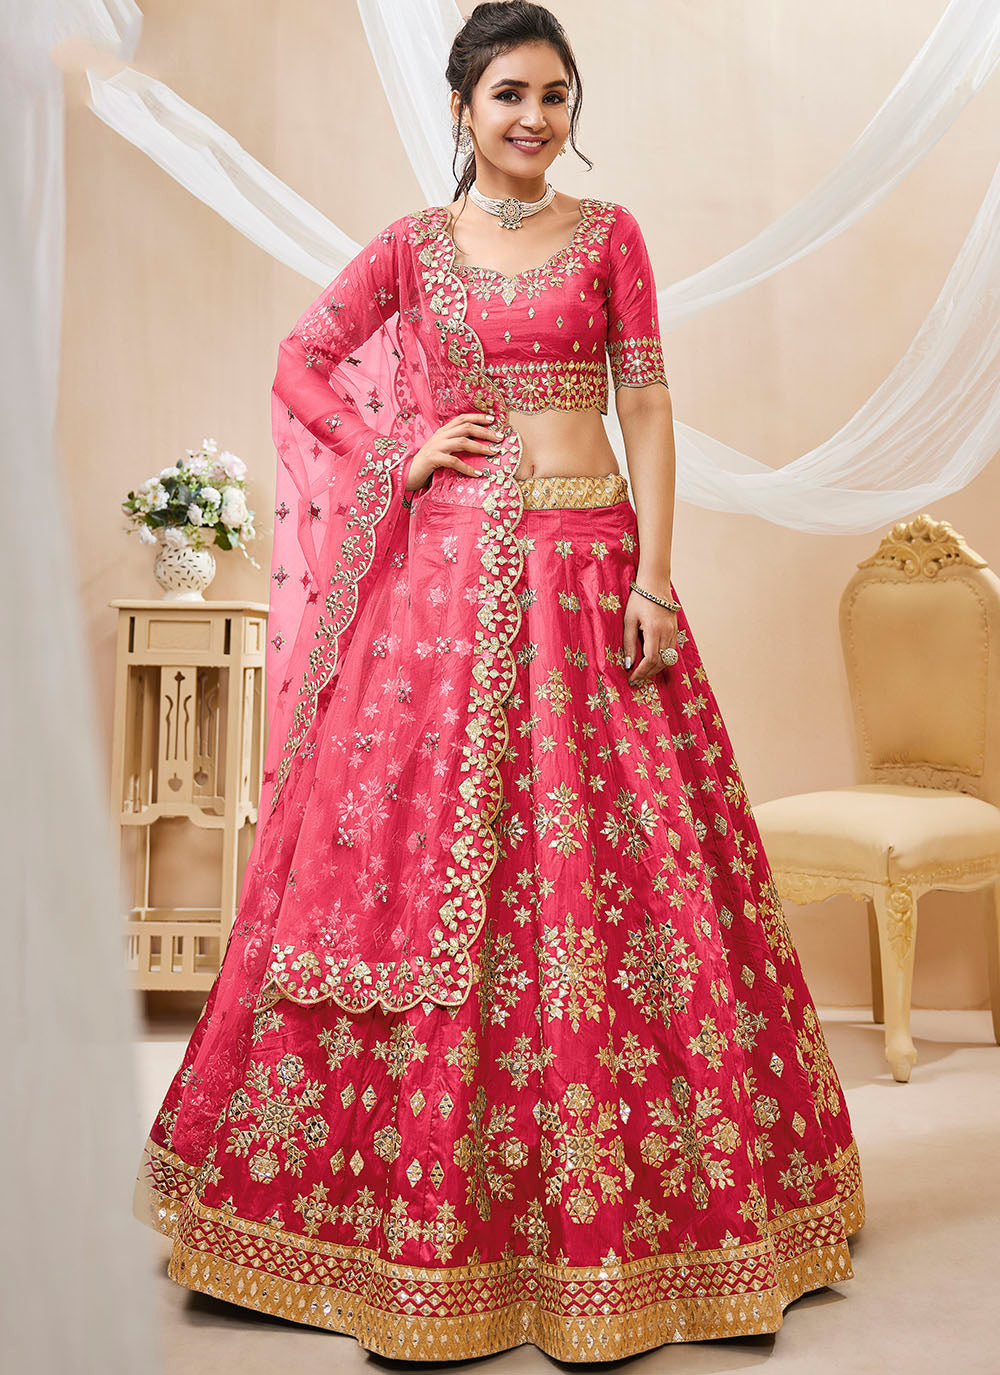 Bridal Lehenga For Traditional Look Modern Style Indian Wedding Wear Choli  | eBay